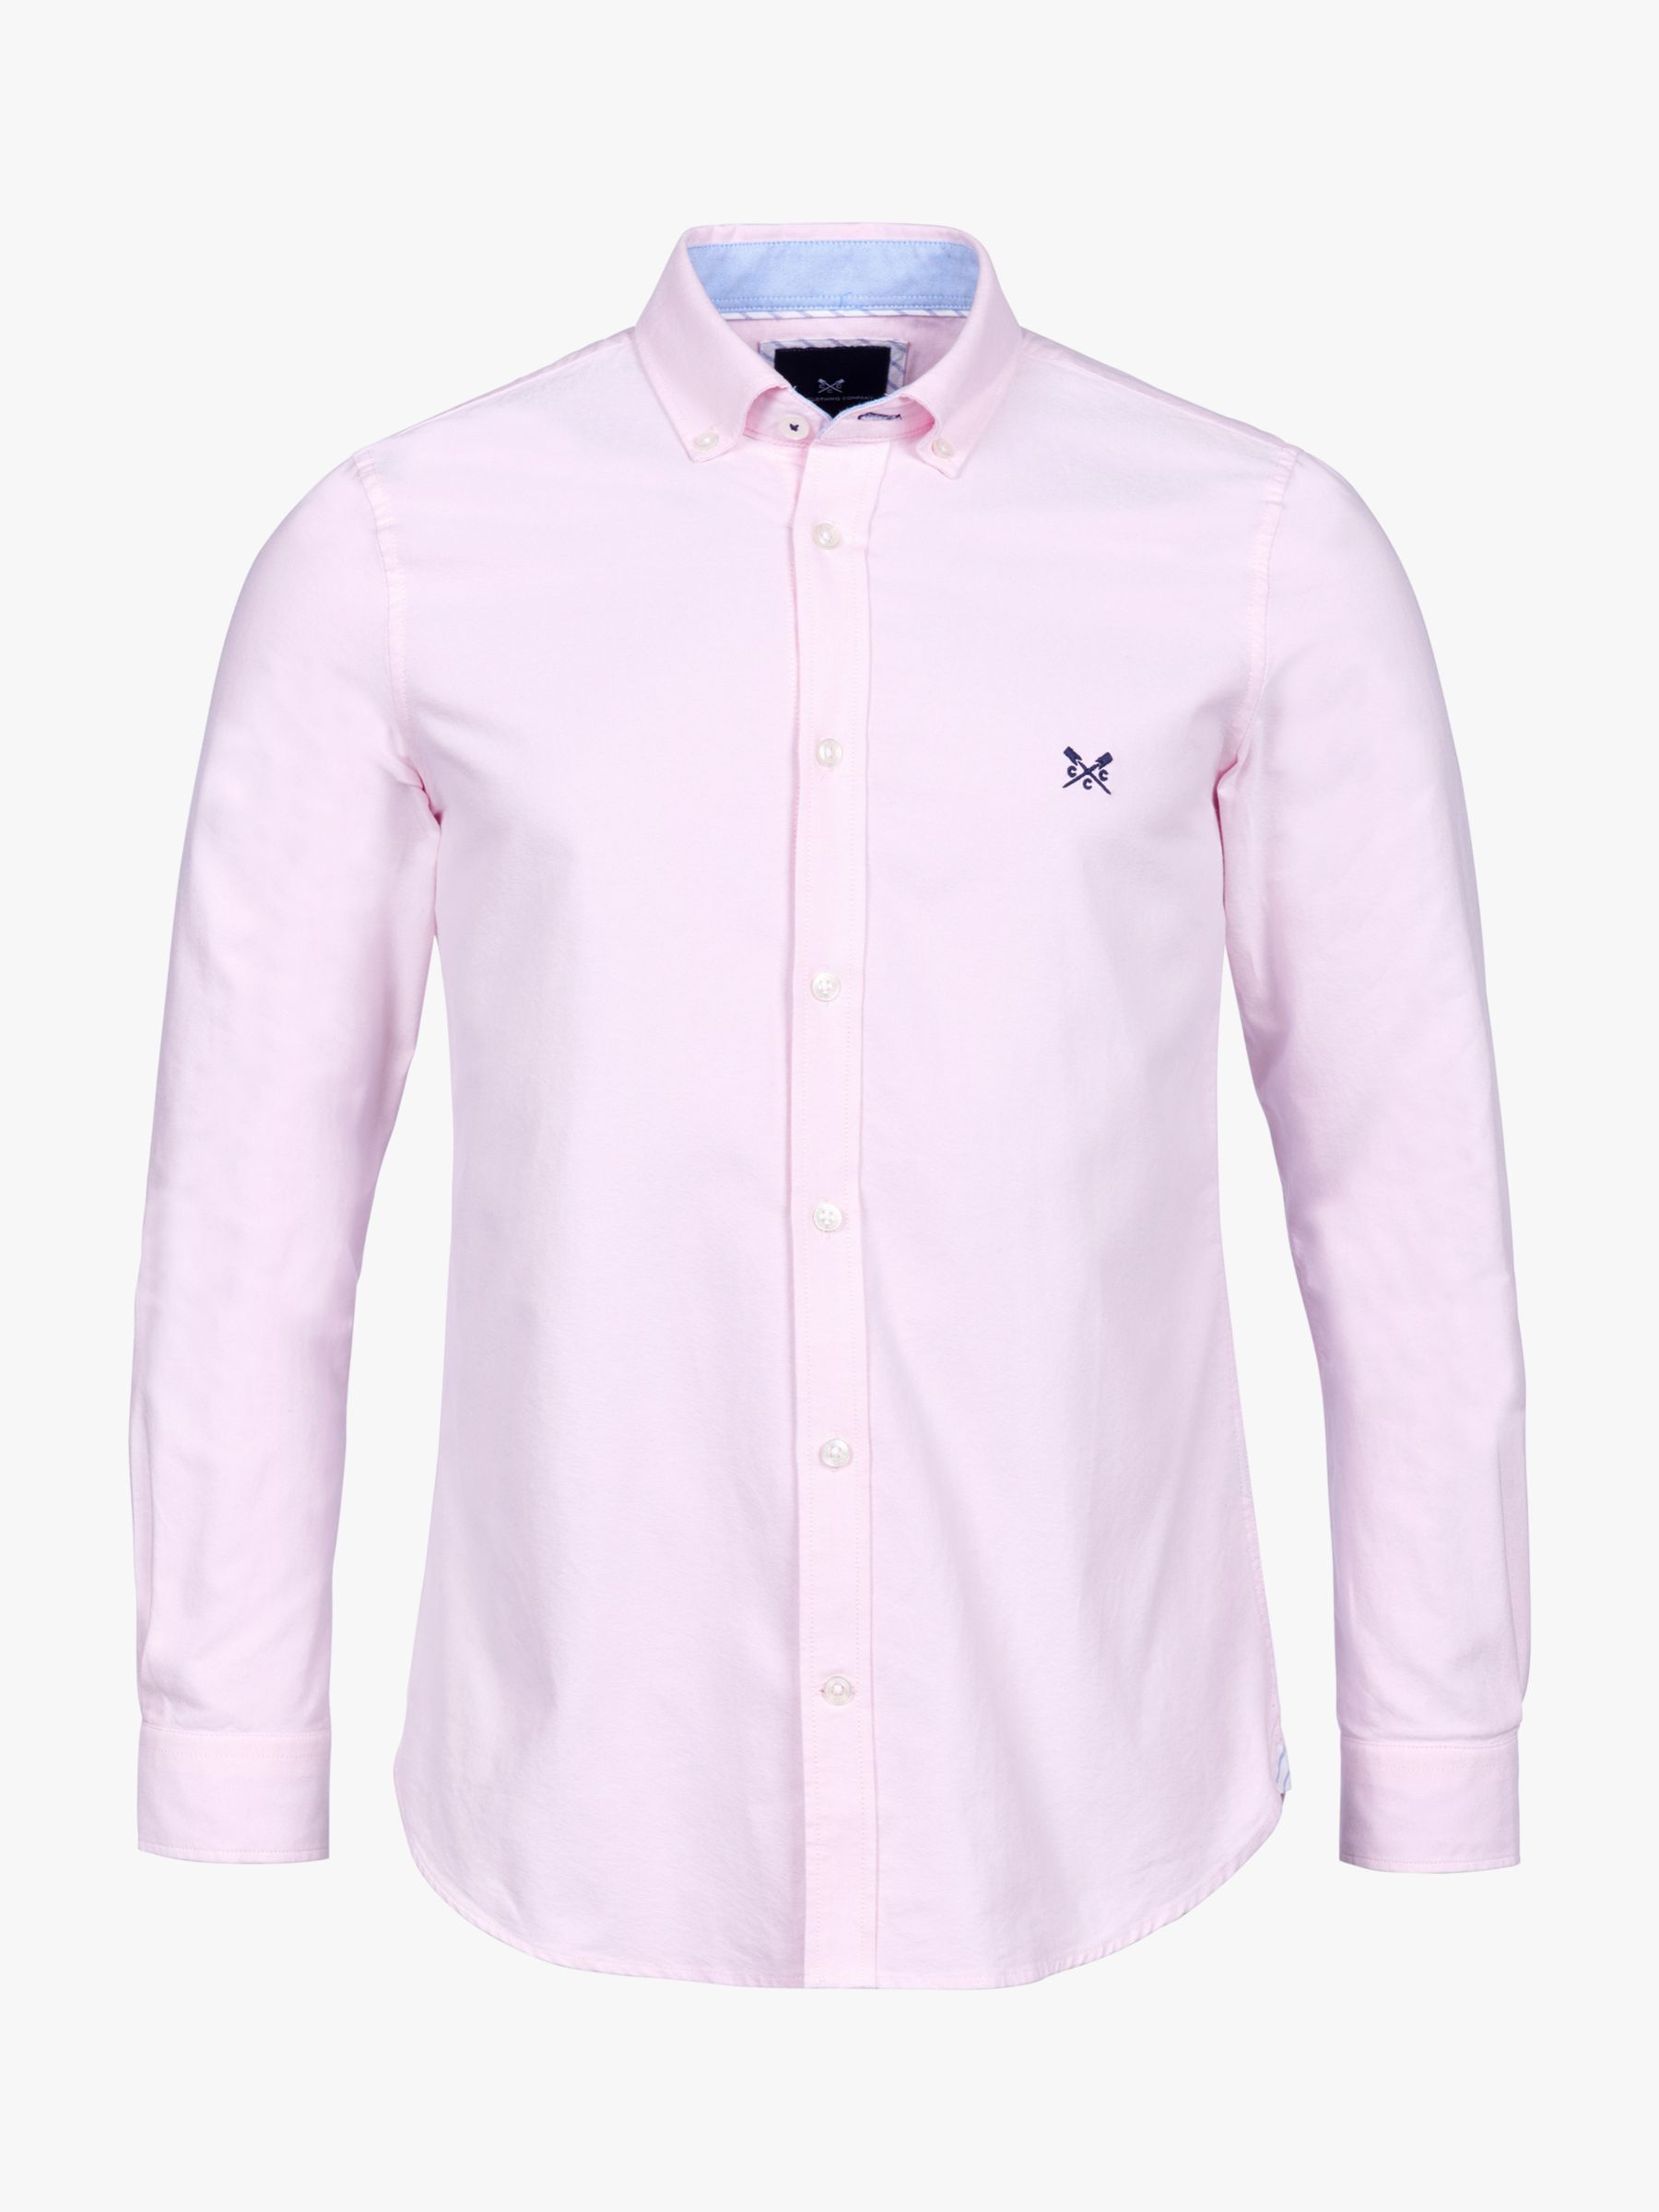 Crew Clothing Slim Fit Long Sleeve Oxford Shirt, Light Pink, XS